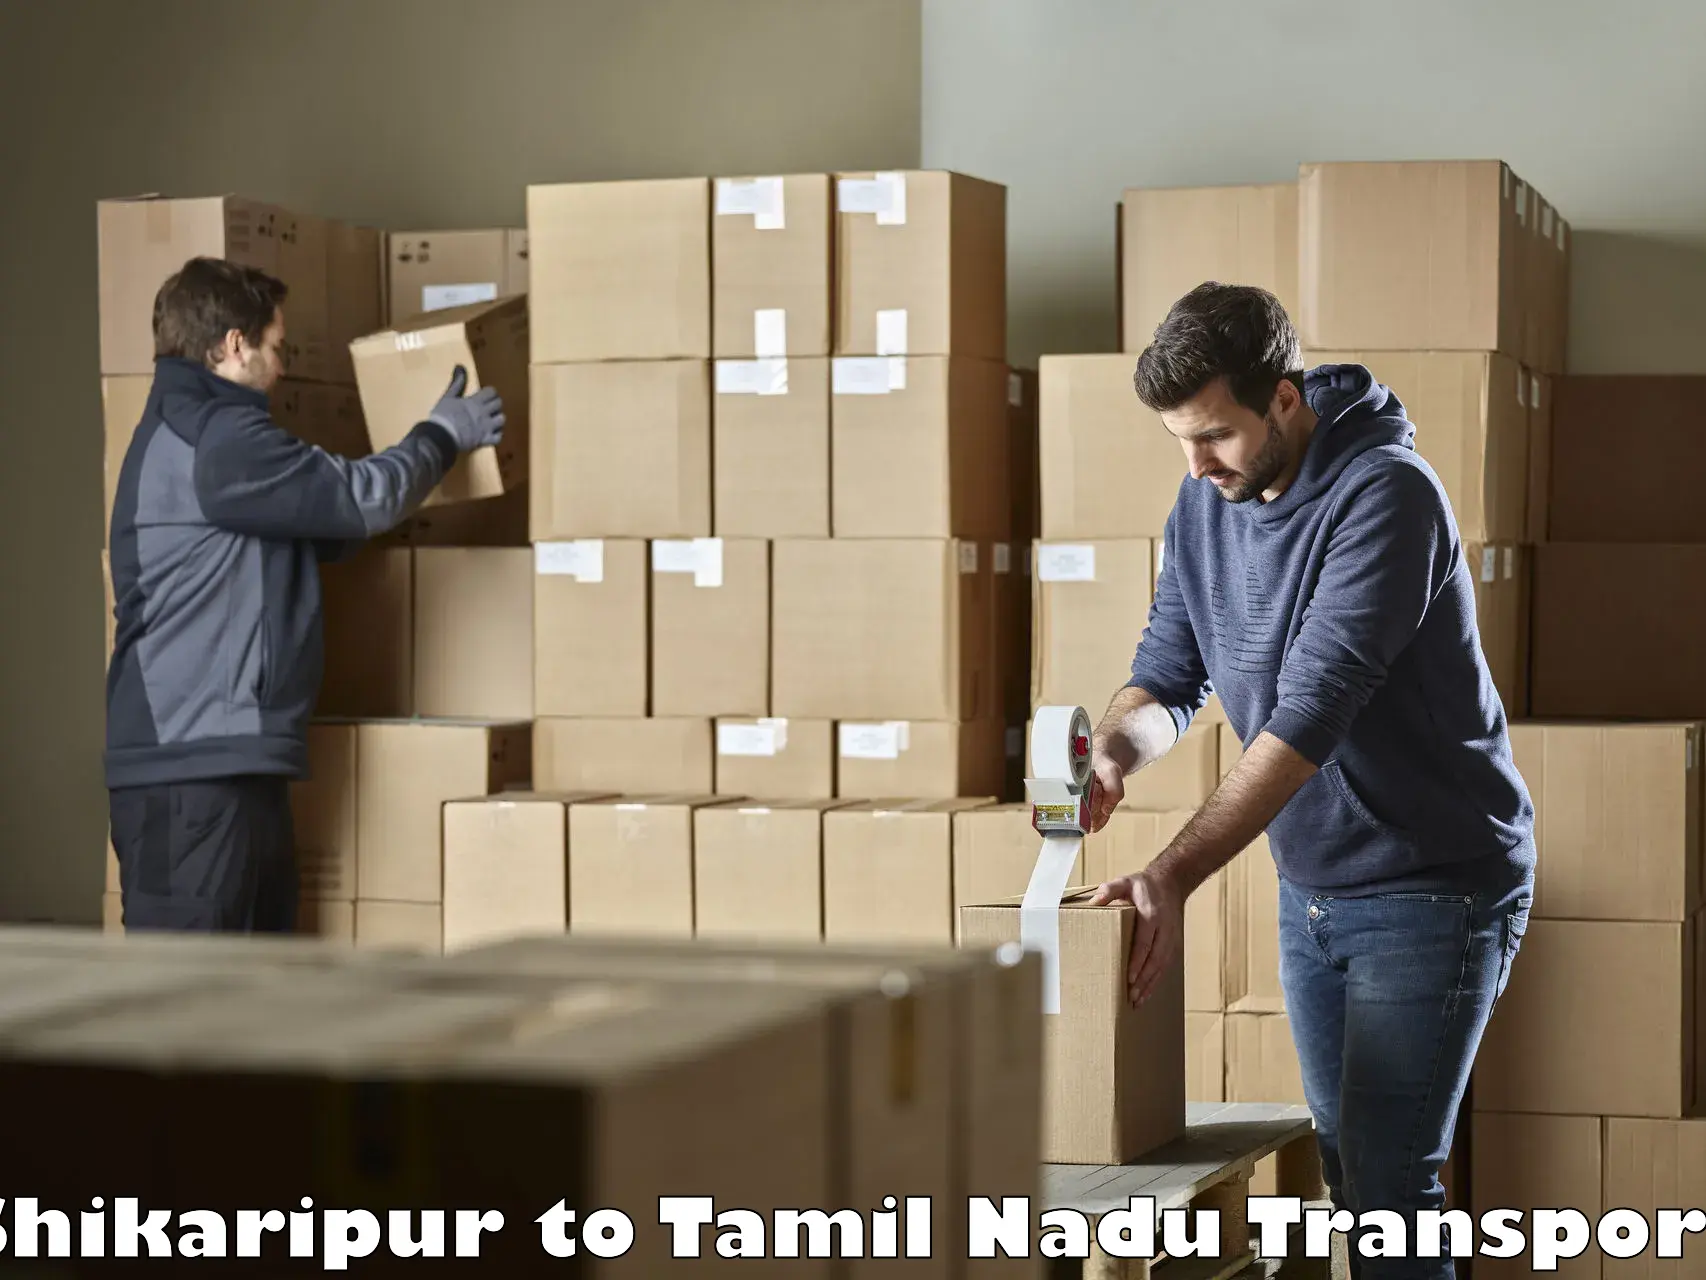 Furniture transport service Shikaripur to Tirunelveli